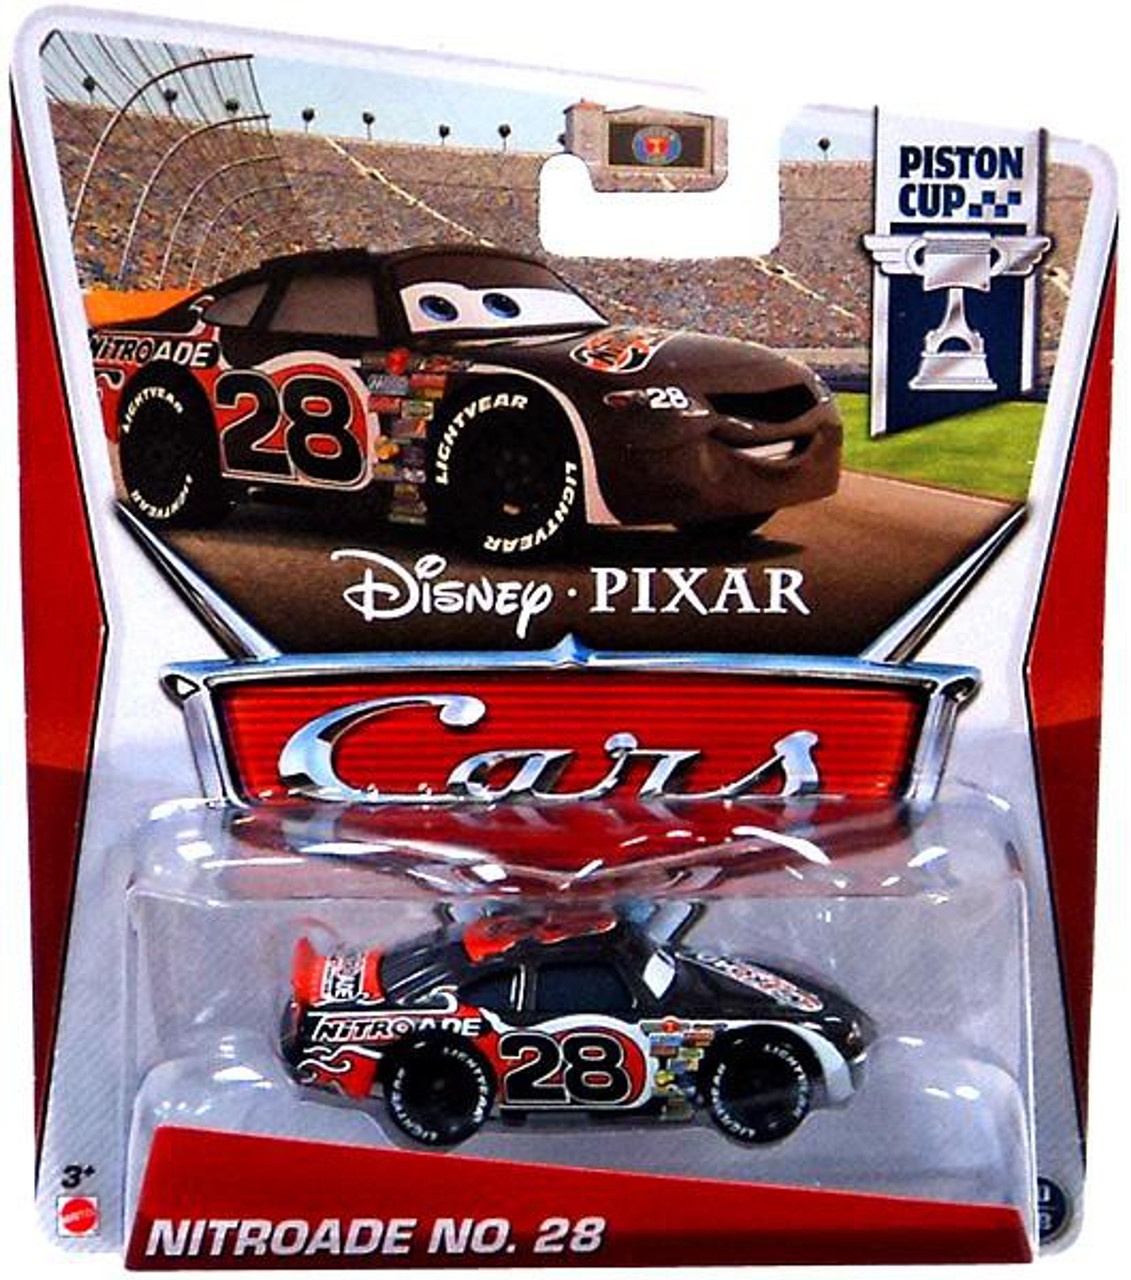 Disney/Pixar Cars Diecast Nitroade #28 Vehicle